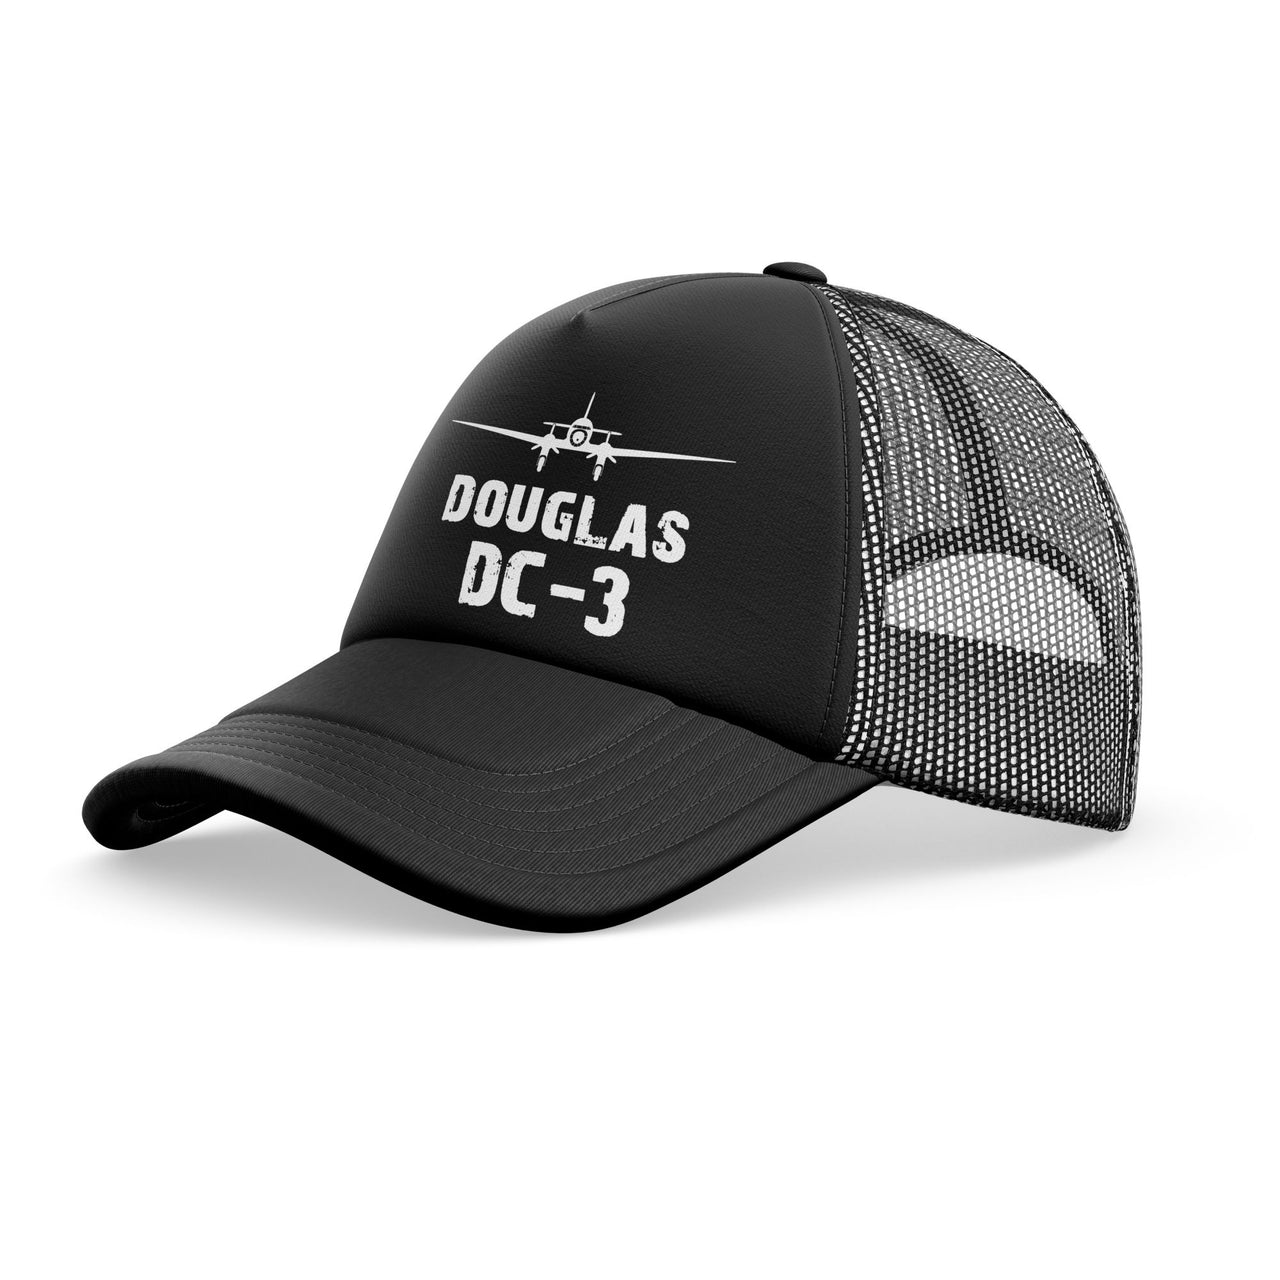 Douglas DC-3 & Plane Designed Trucker Caps & Hats